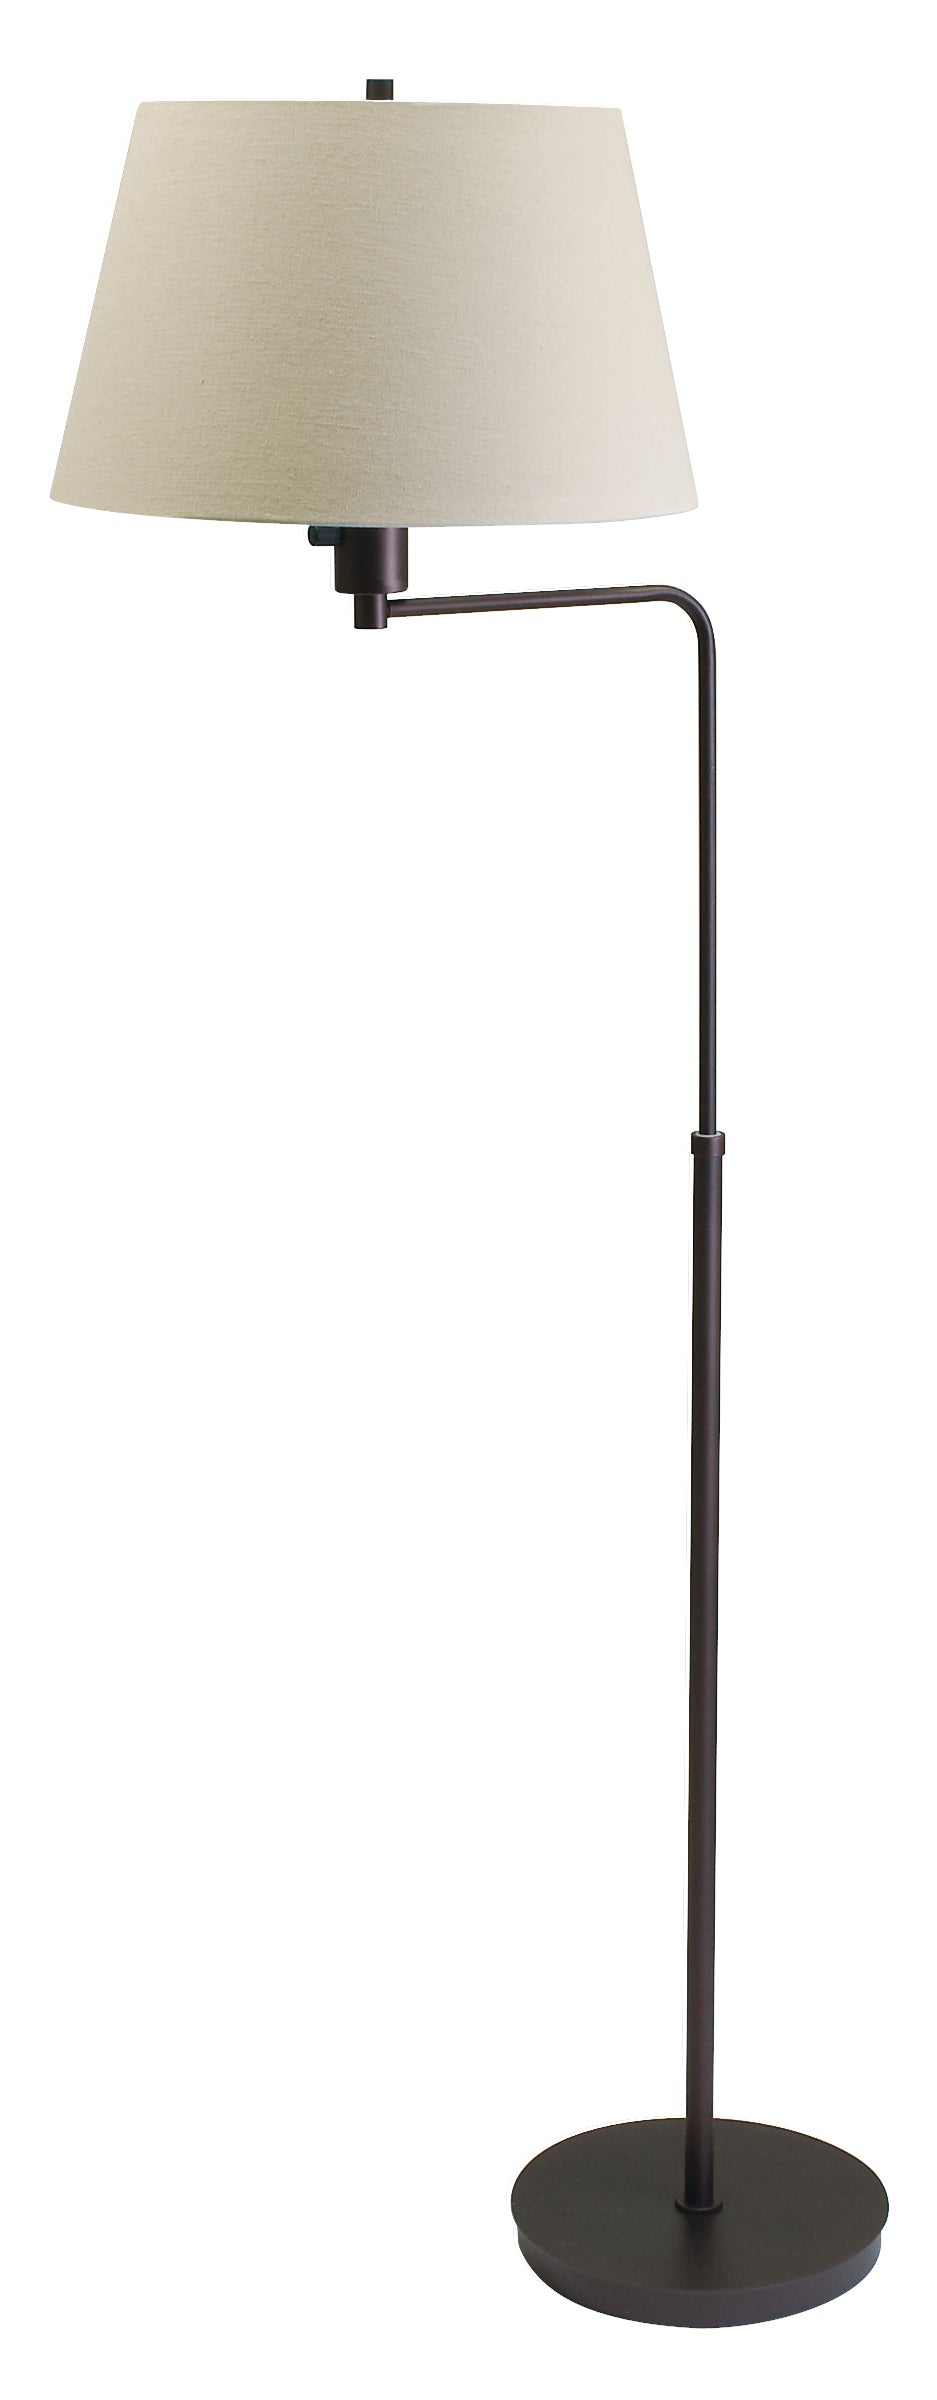 House of Troy Generation Adjustable Floor Lamp Chestnut Bronze G200-CHB